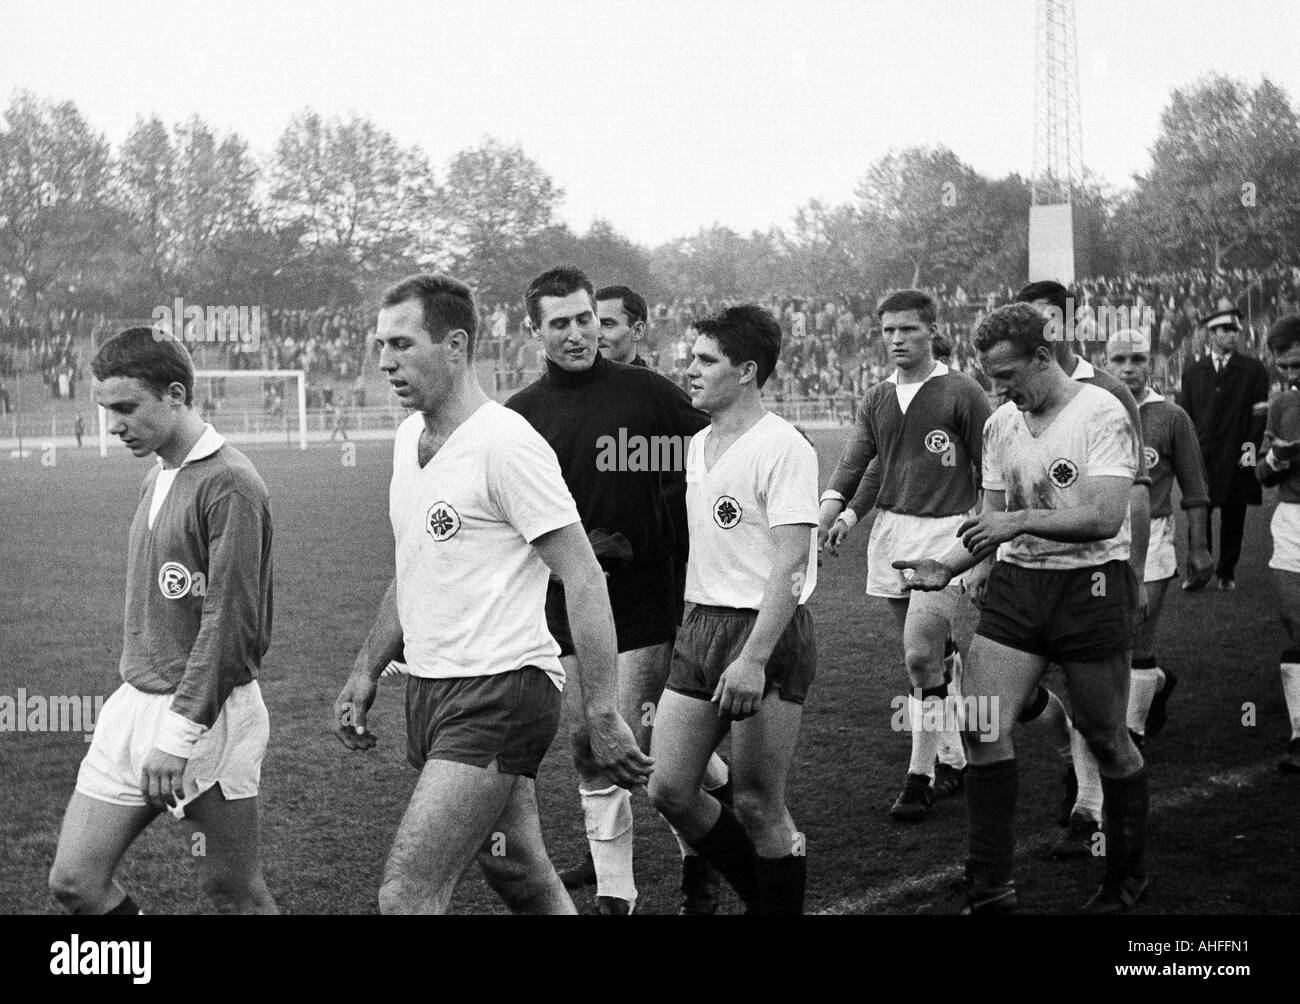 Regionalliga West, football, 1965-1966, Fortuna Düsseldorf par rapport au poste d'Oberhausen 1:3 Stade Rhein, à Gelsenkirchen, les joueurs de football de quitter le terrain, f.l.t.r. Willi Marzok (Ddorf), Friedhelm Kobluhn (RWO), keeper Helmut Traska (RWO), keeper Alb Banque D'Images